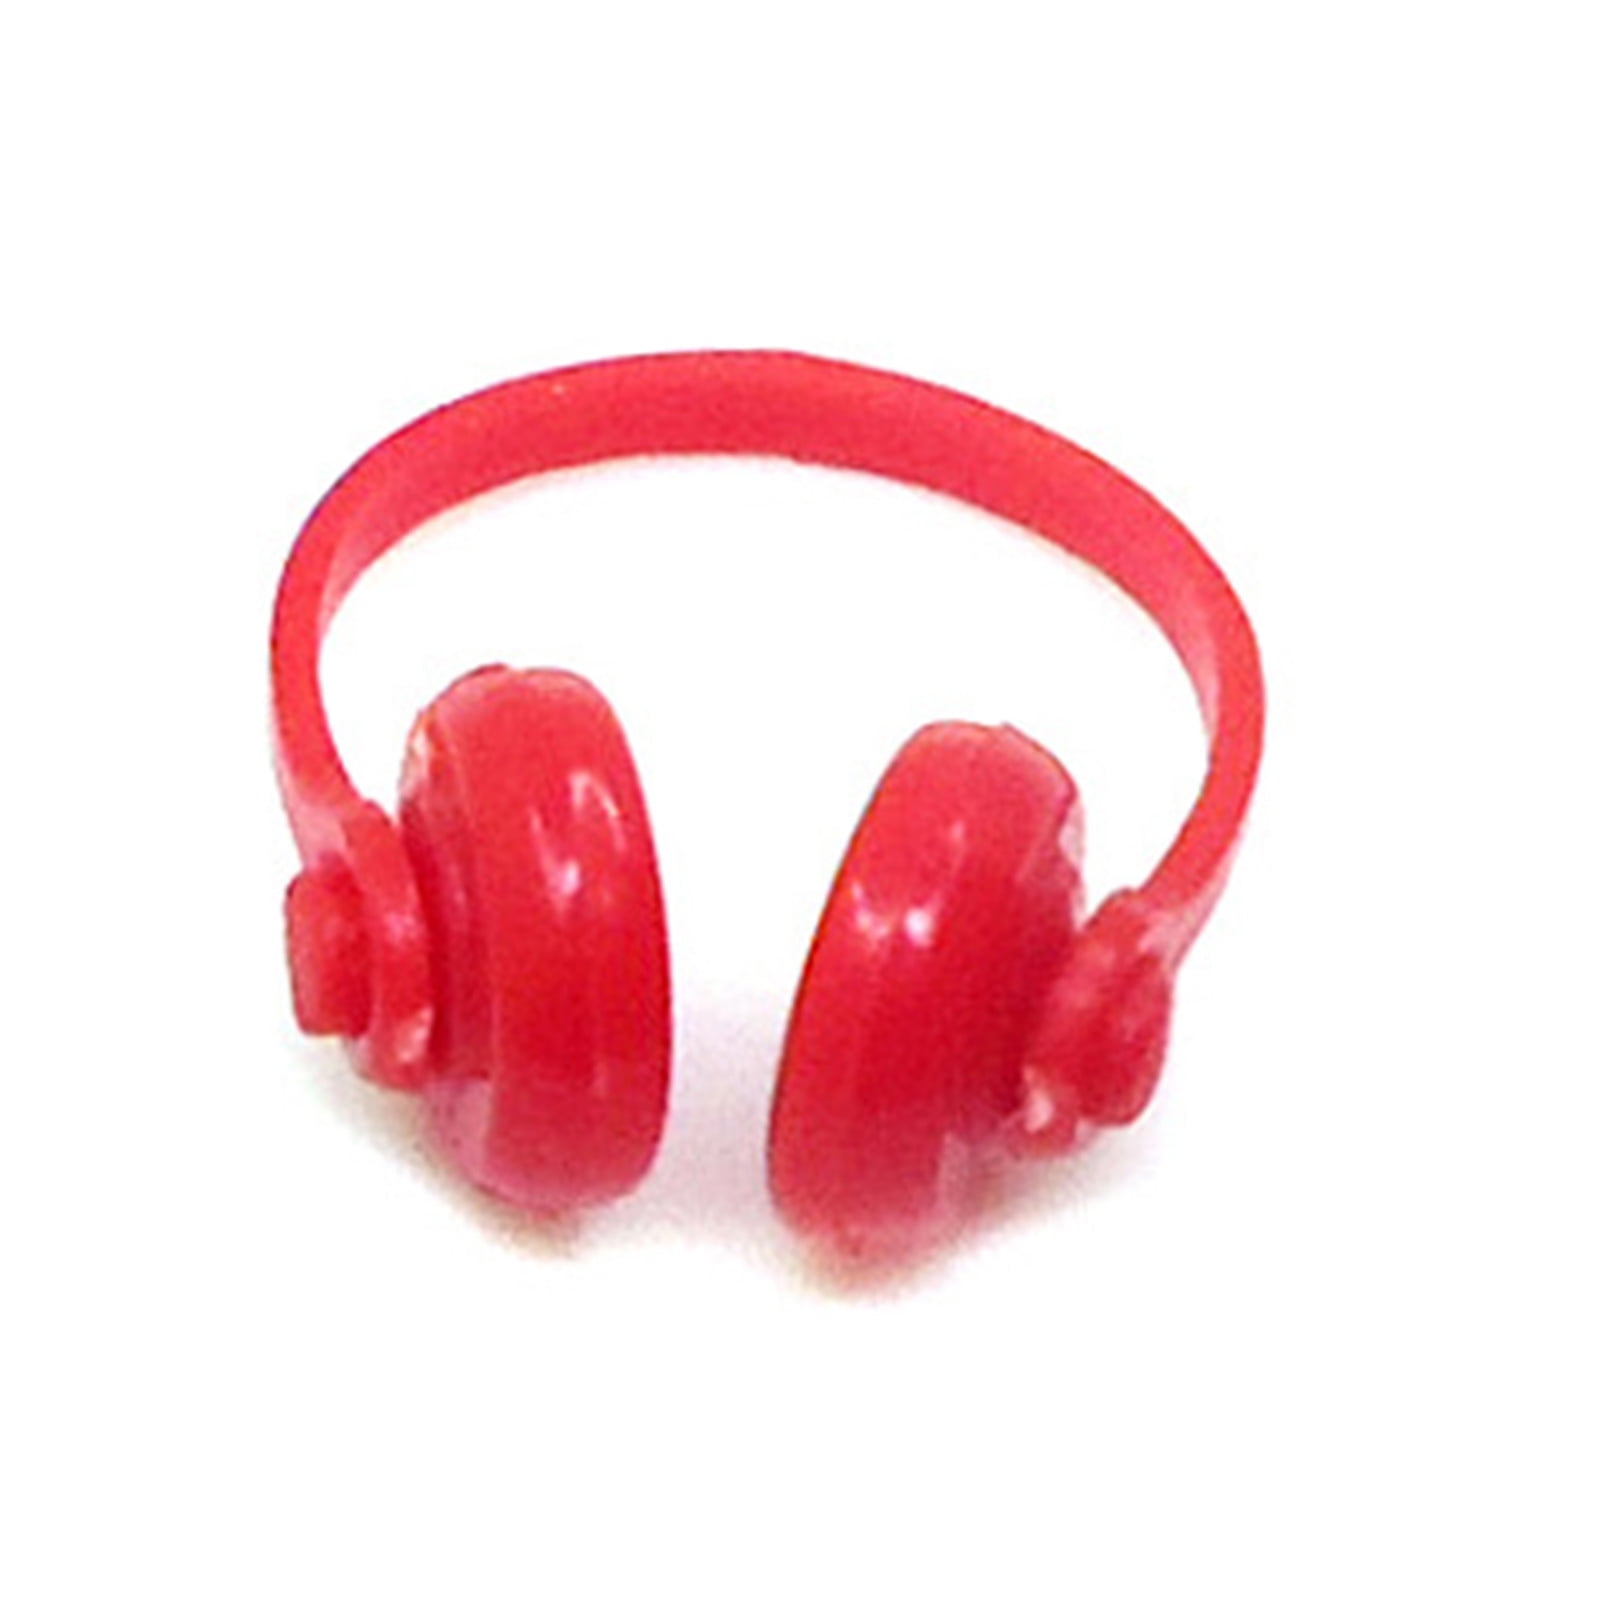 DOLLHOUSE 1:12 Scale Miniature Neat Black Plastic Headphones 